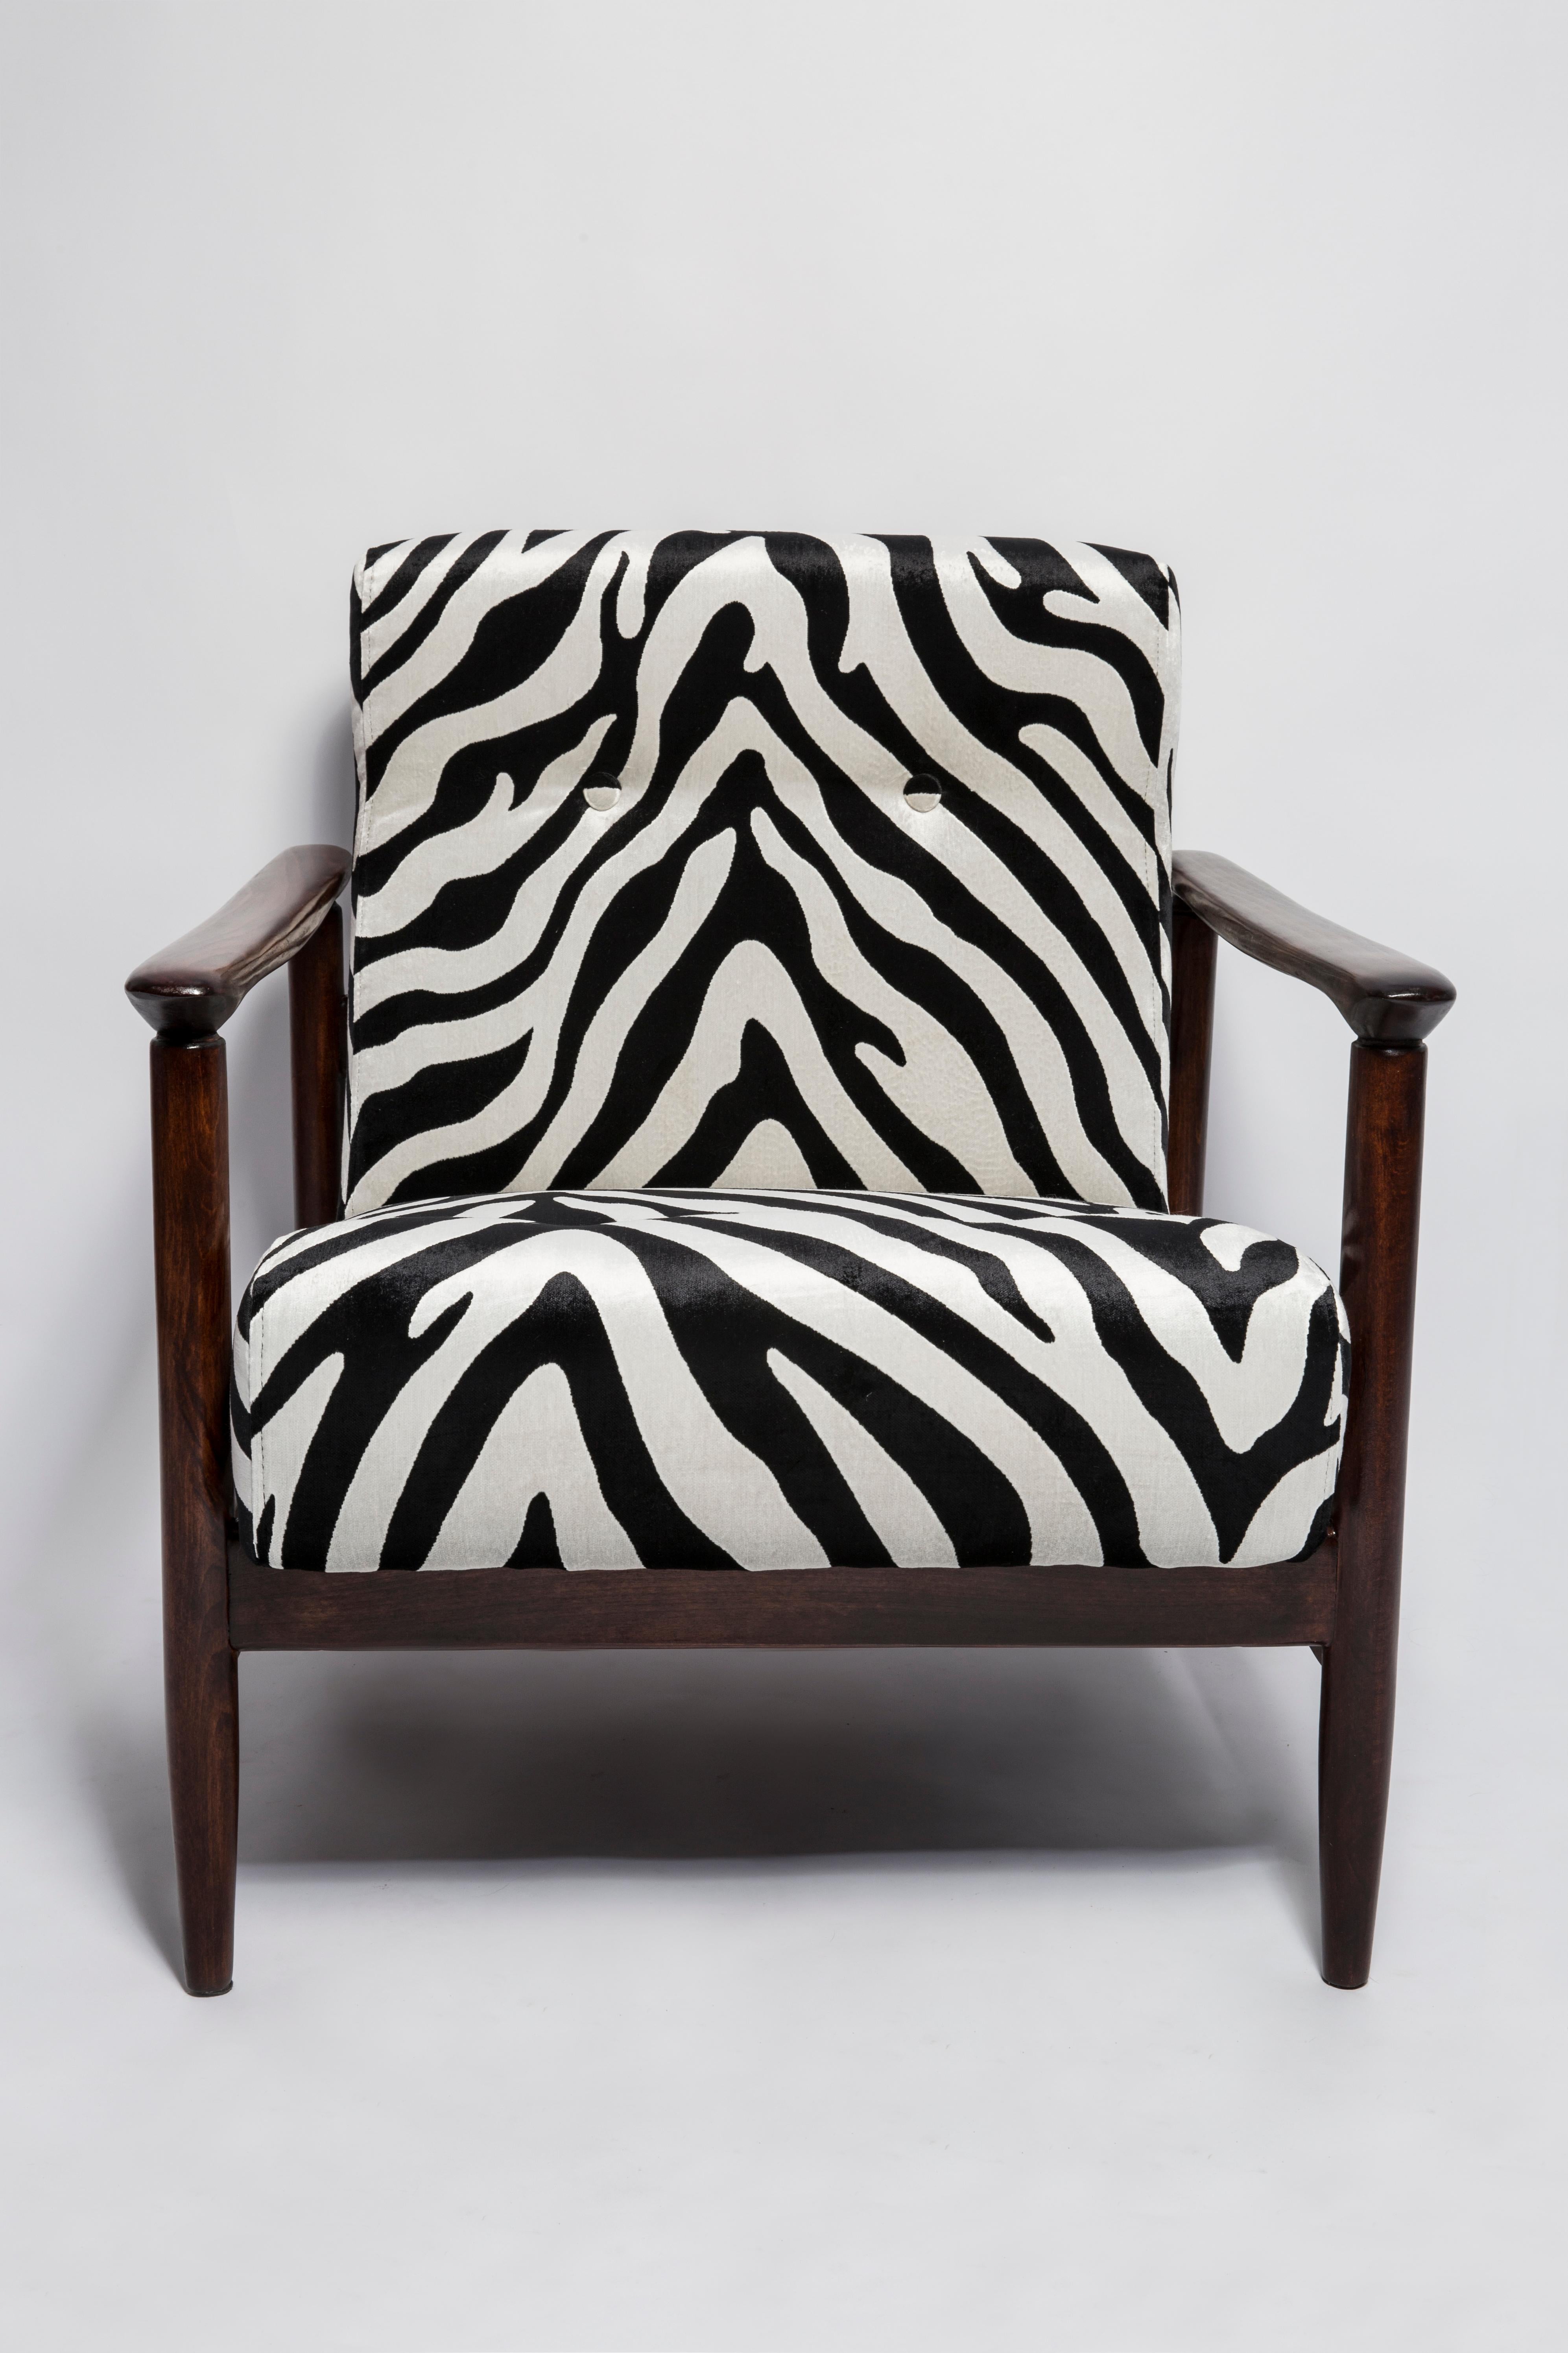 Zebra-Samt-Sessel, GFM 142, Edmund Homa, Europa, 1960er Jahre (20. Jahrhundert) im Angebot